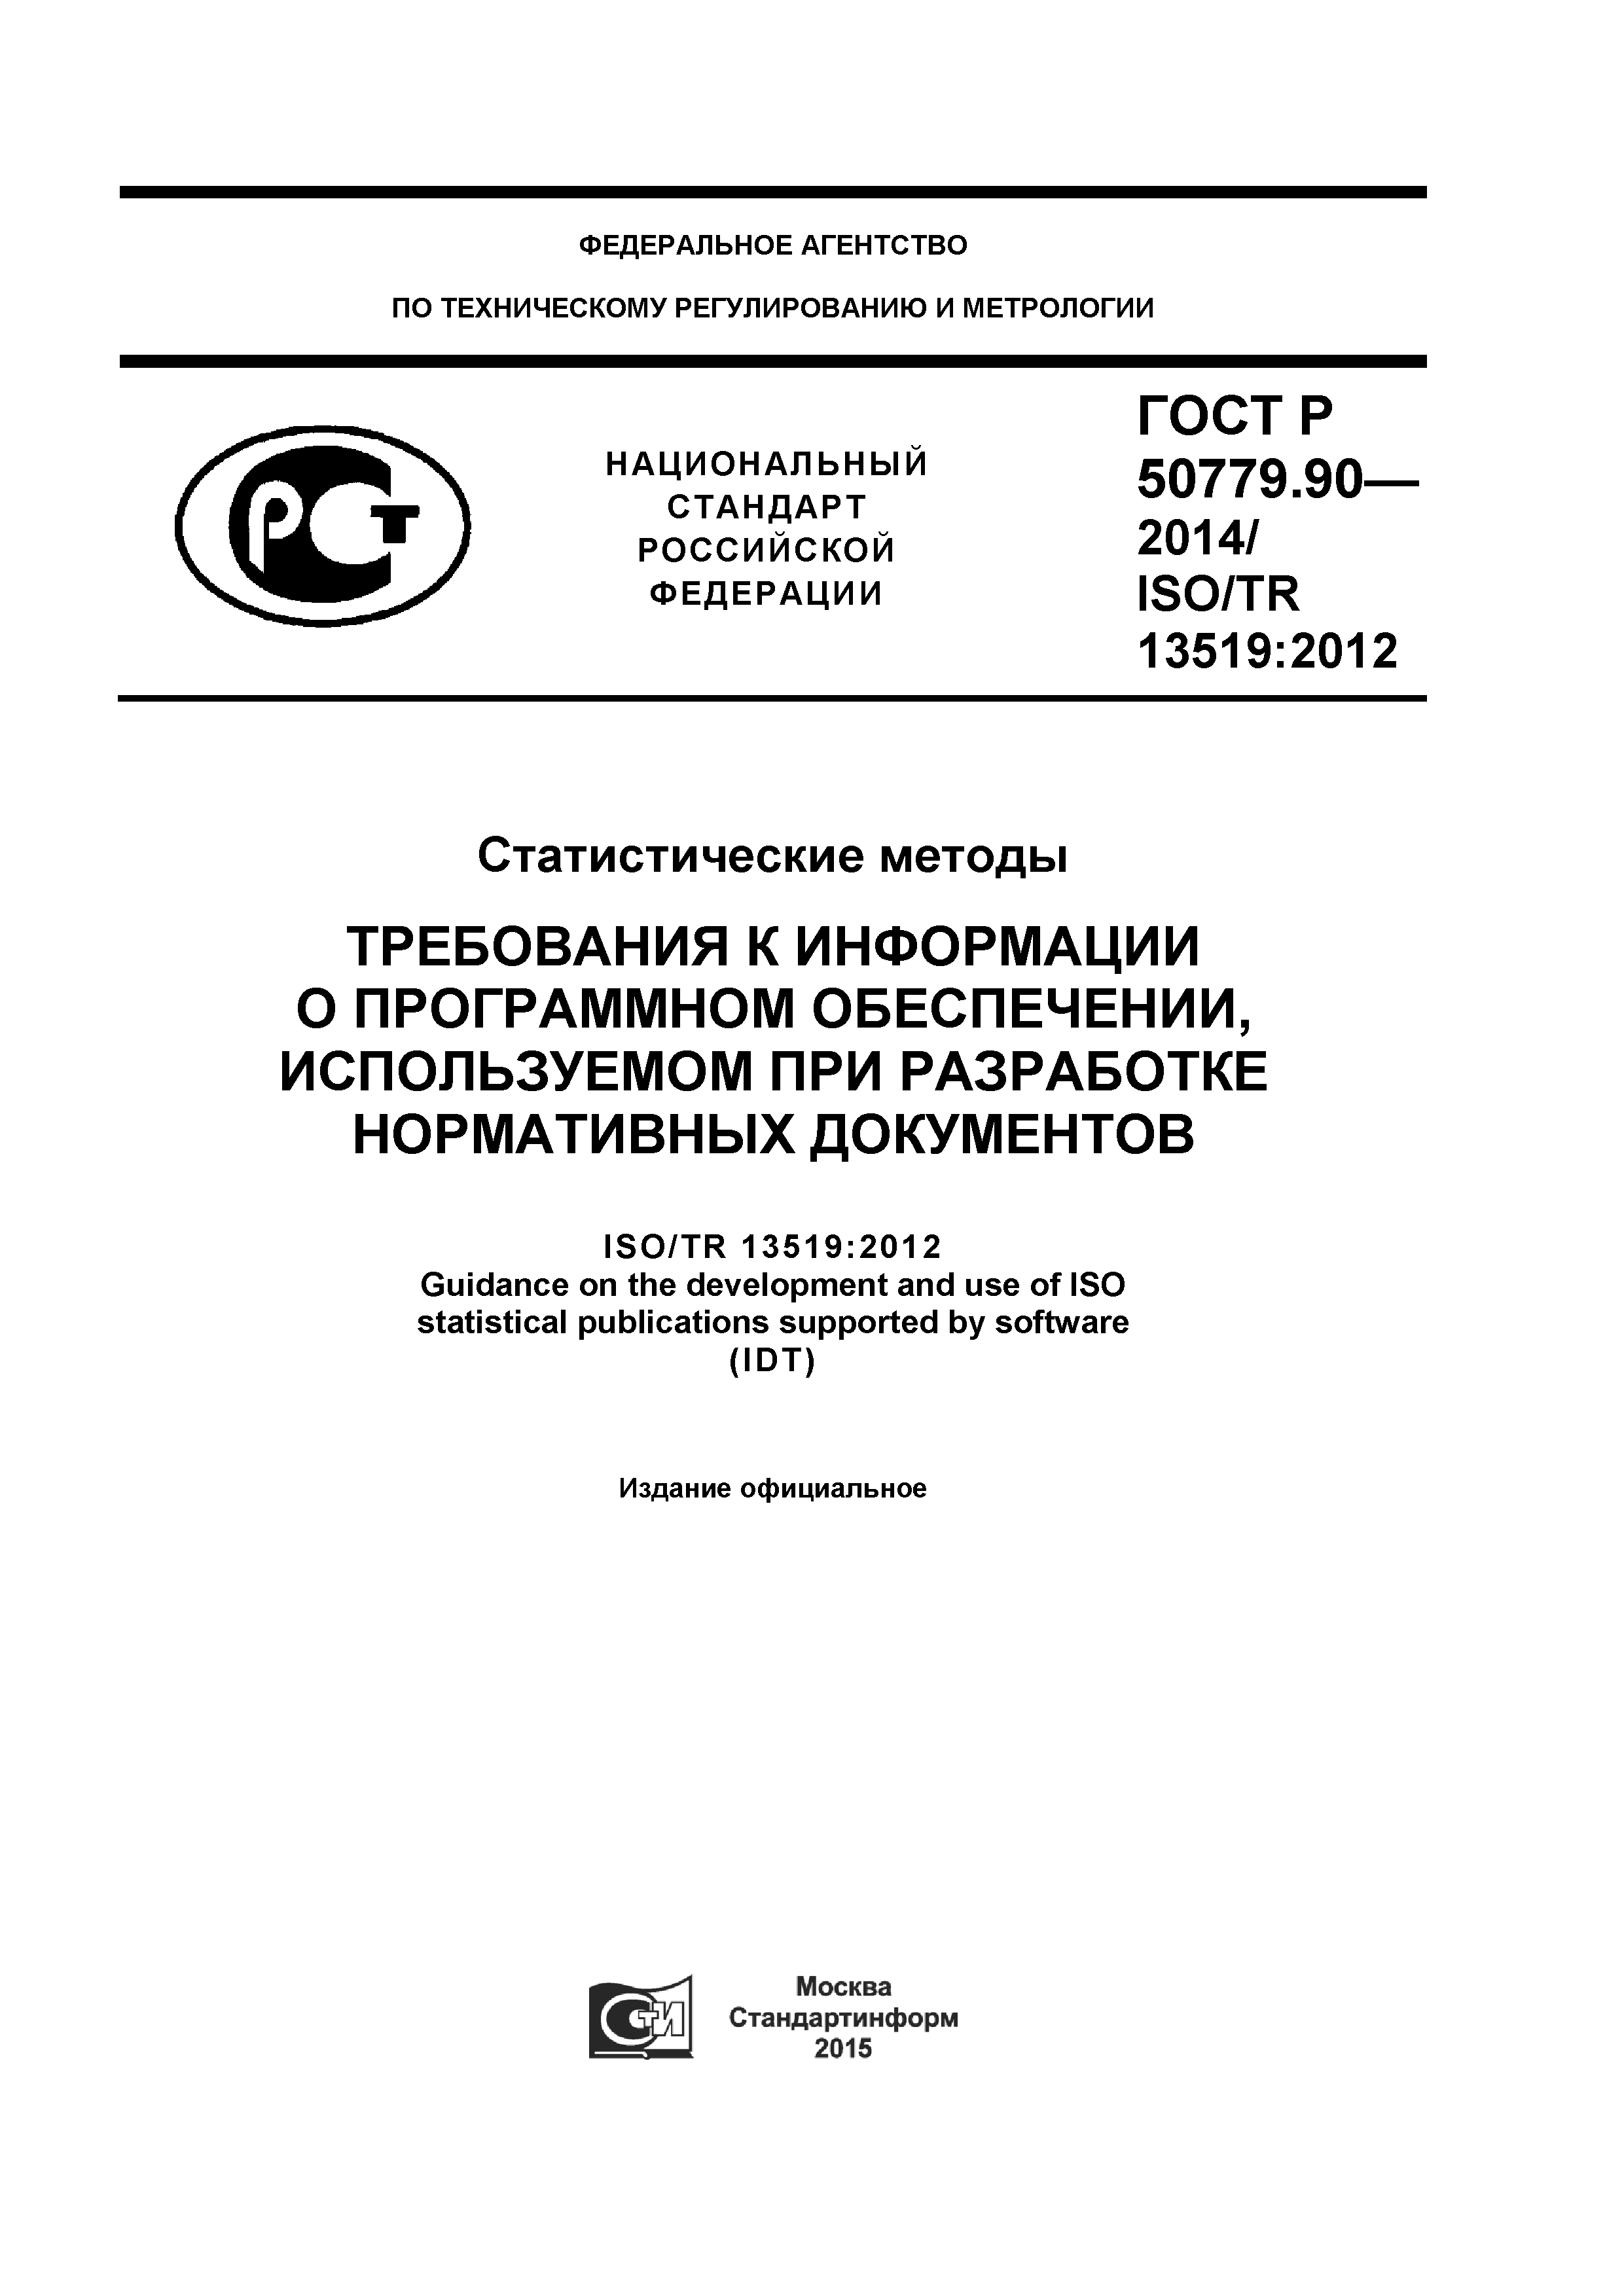 ГОСТ Р 50779.90-2014